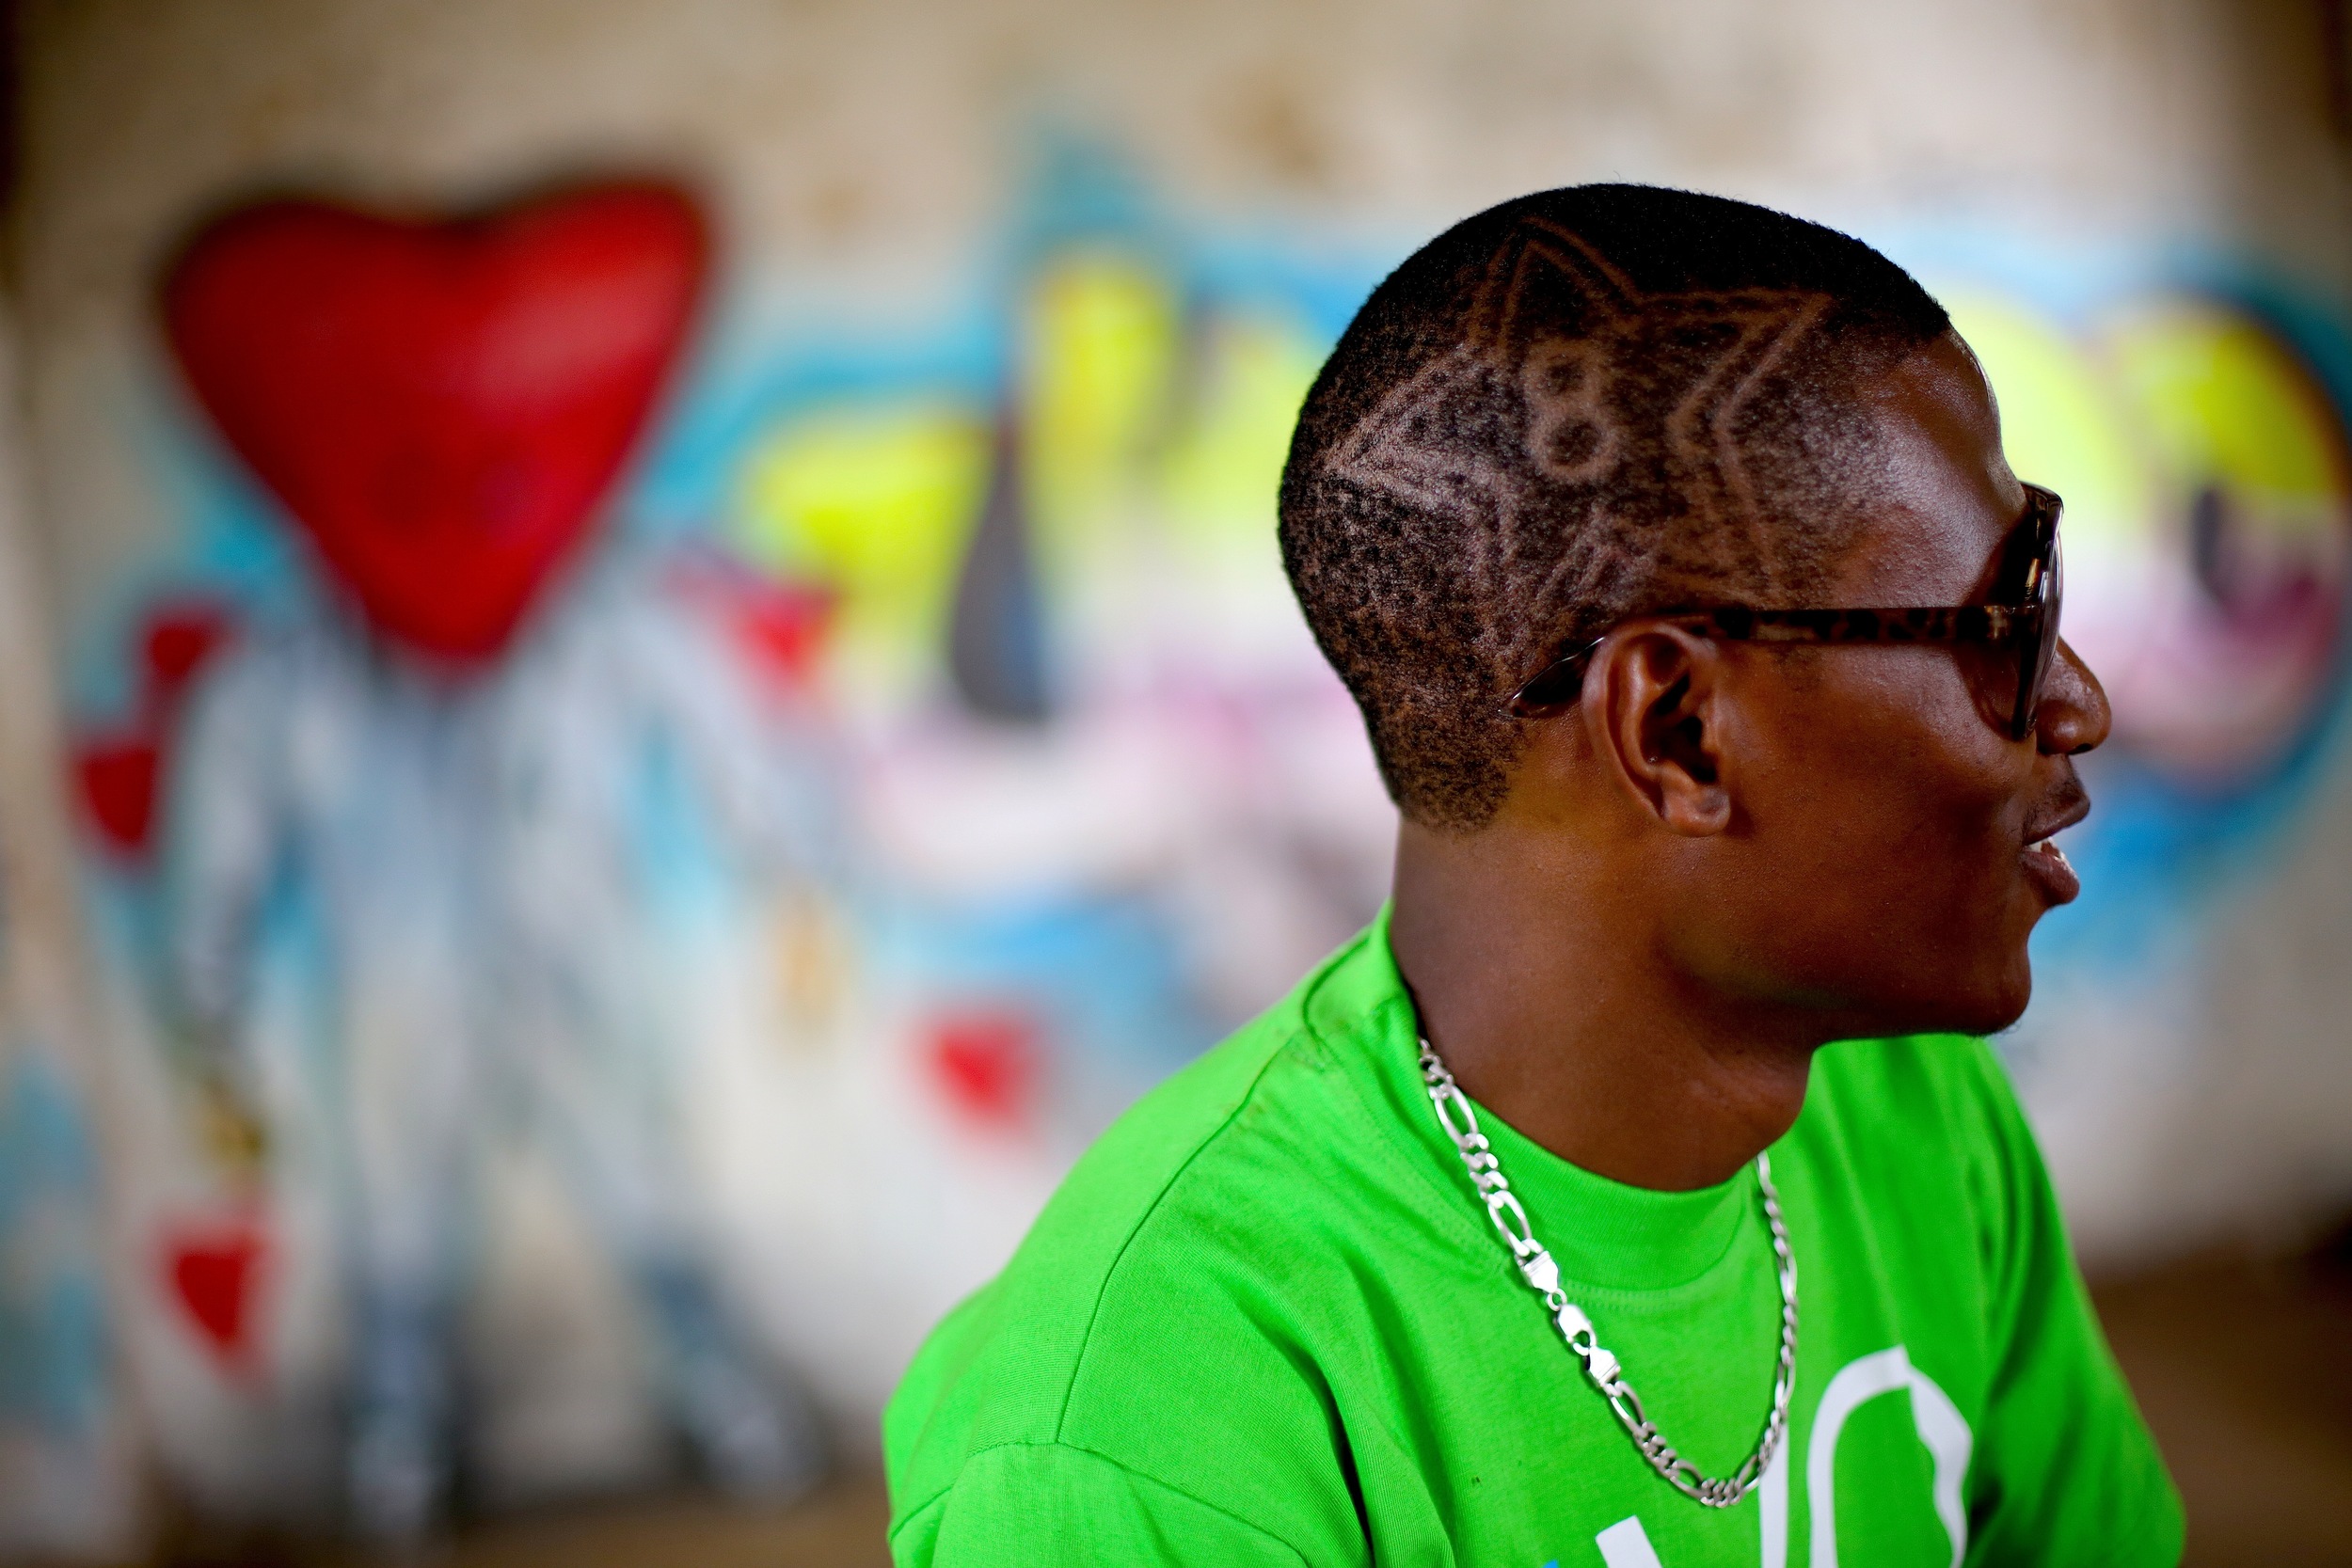 Kenyan rapper Octopizzo shows off his haircut